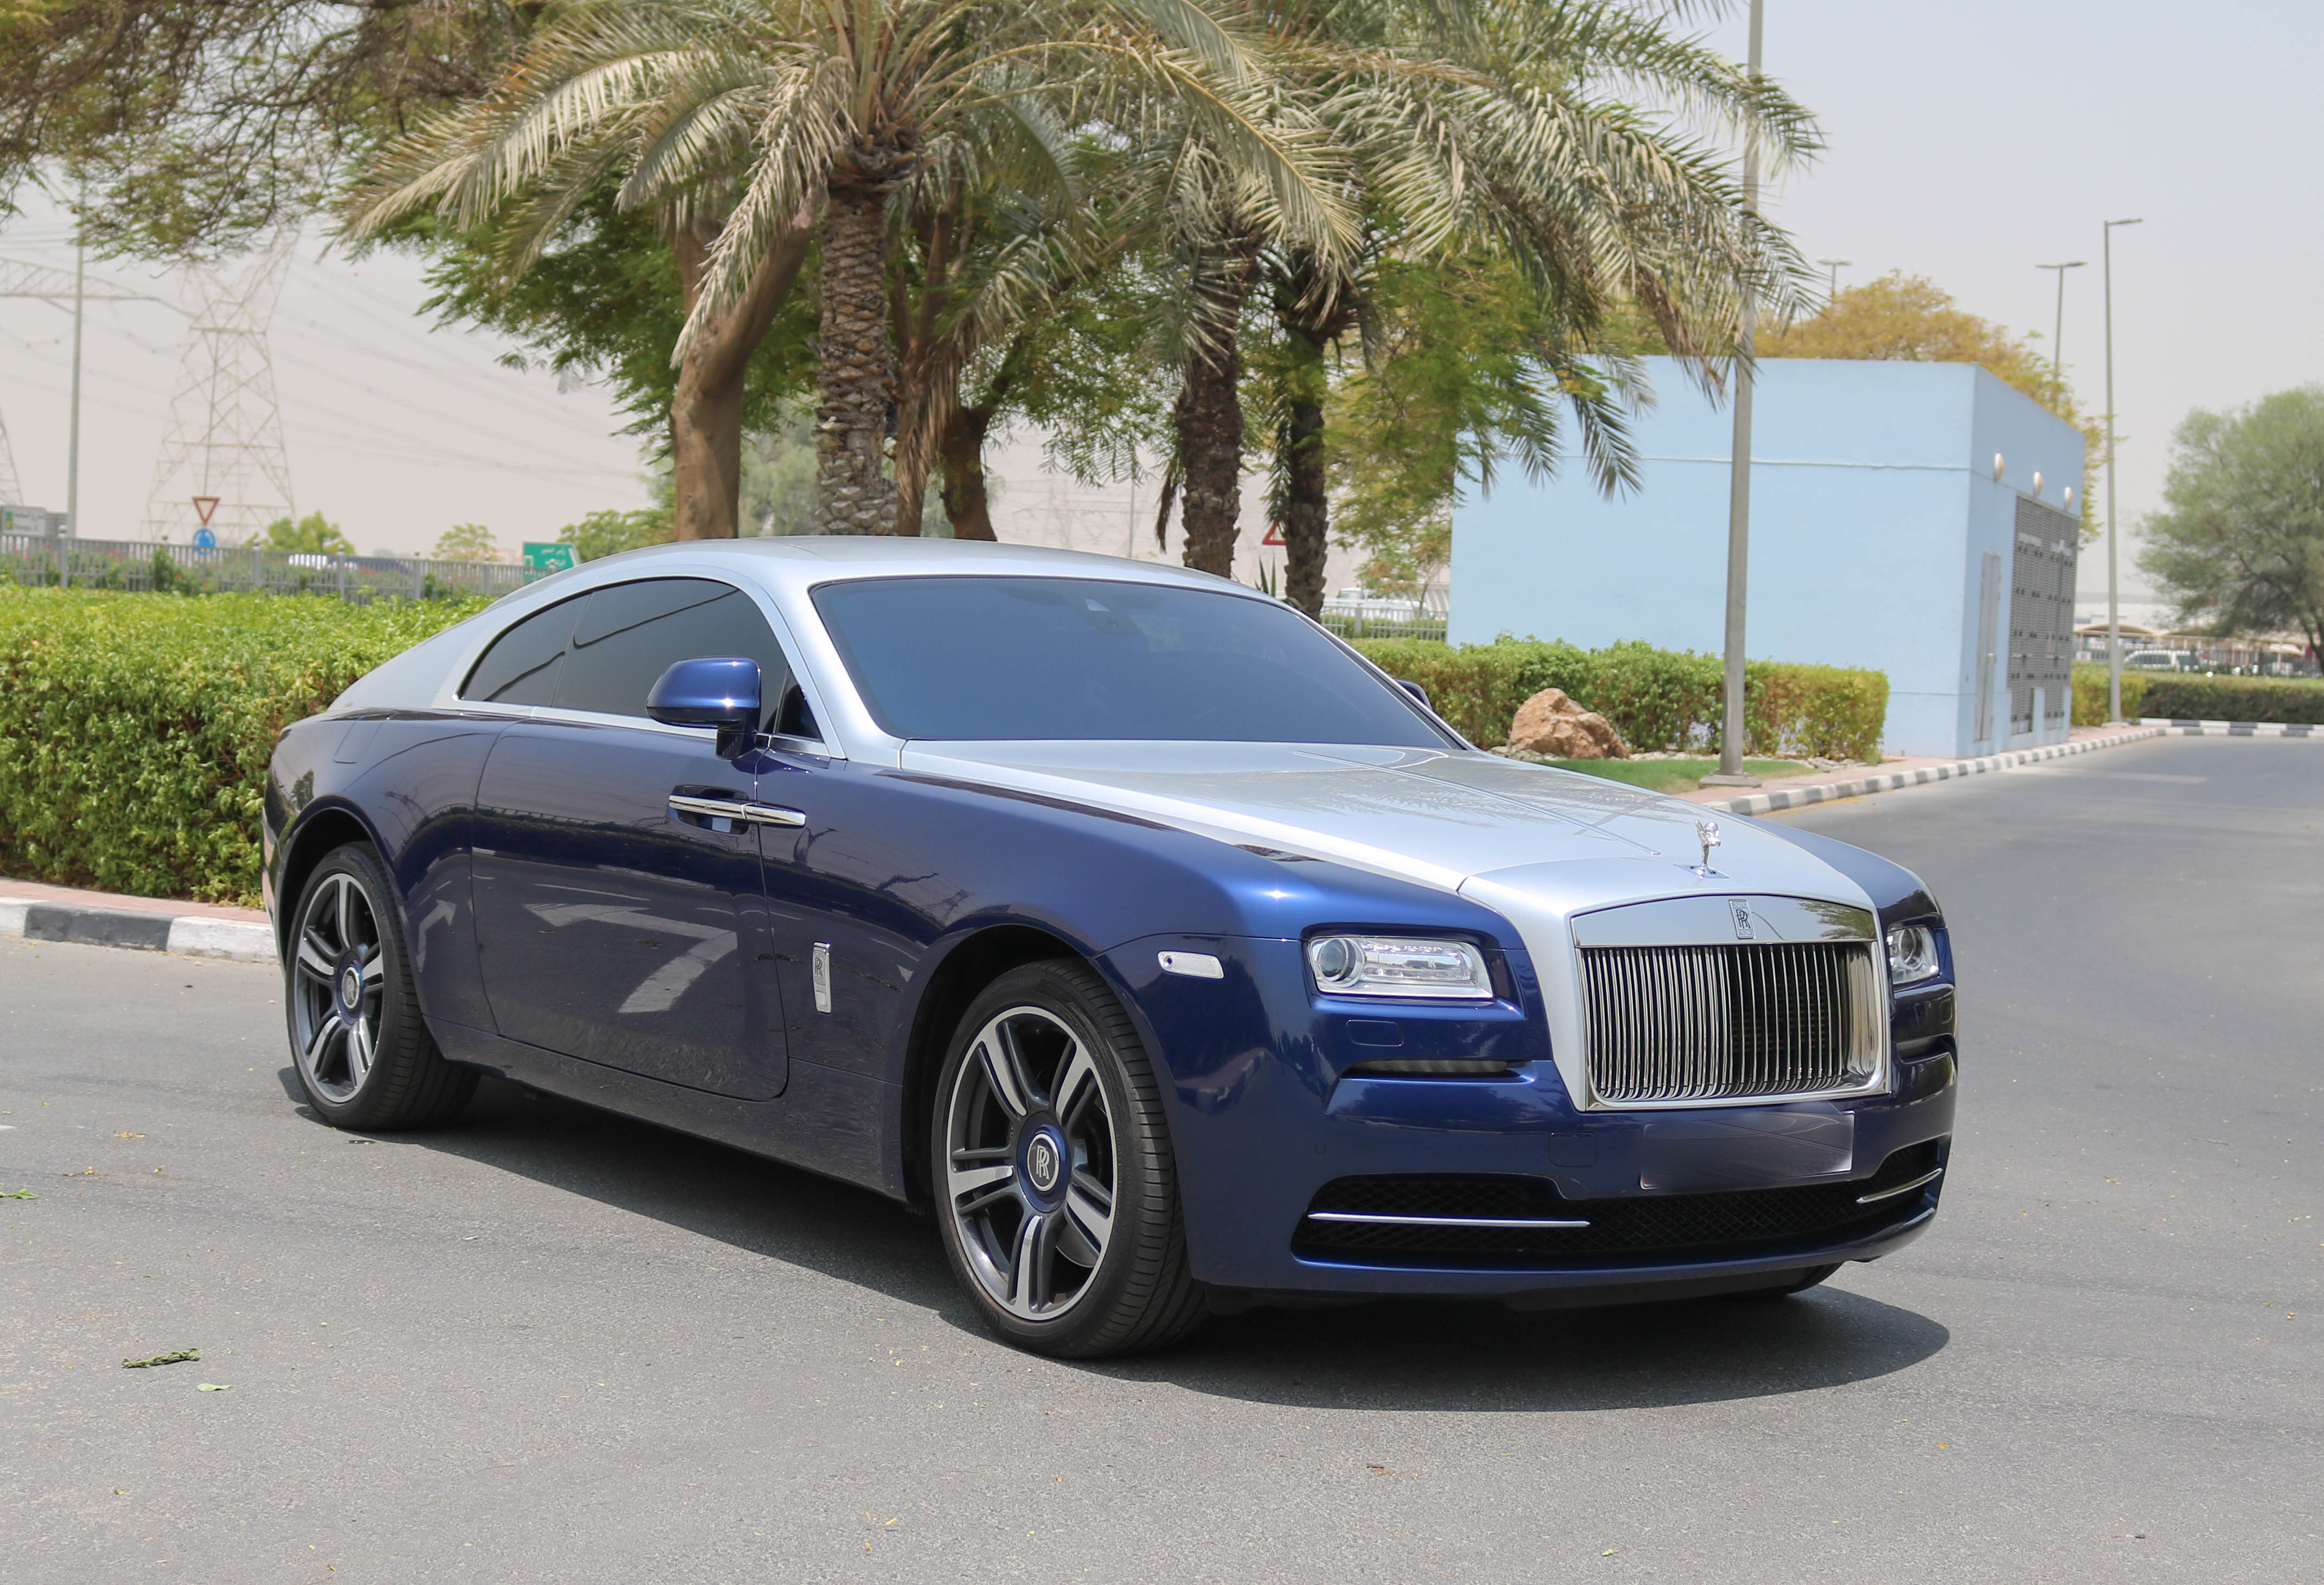 Роллс врайт. Rolls Royce Wraith Coupe. Rolls Royce Wraith 2015. Rolls Royce Wraith купе. Роллс Ройс купе 2015.